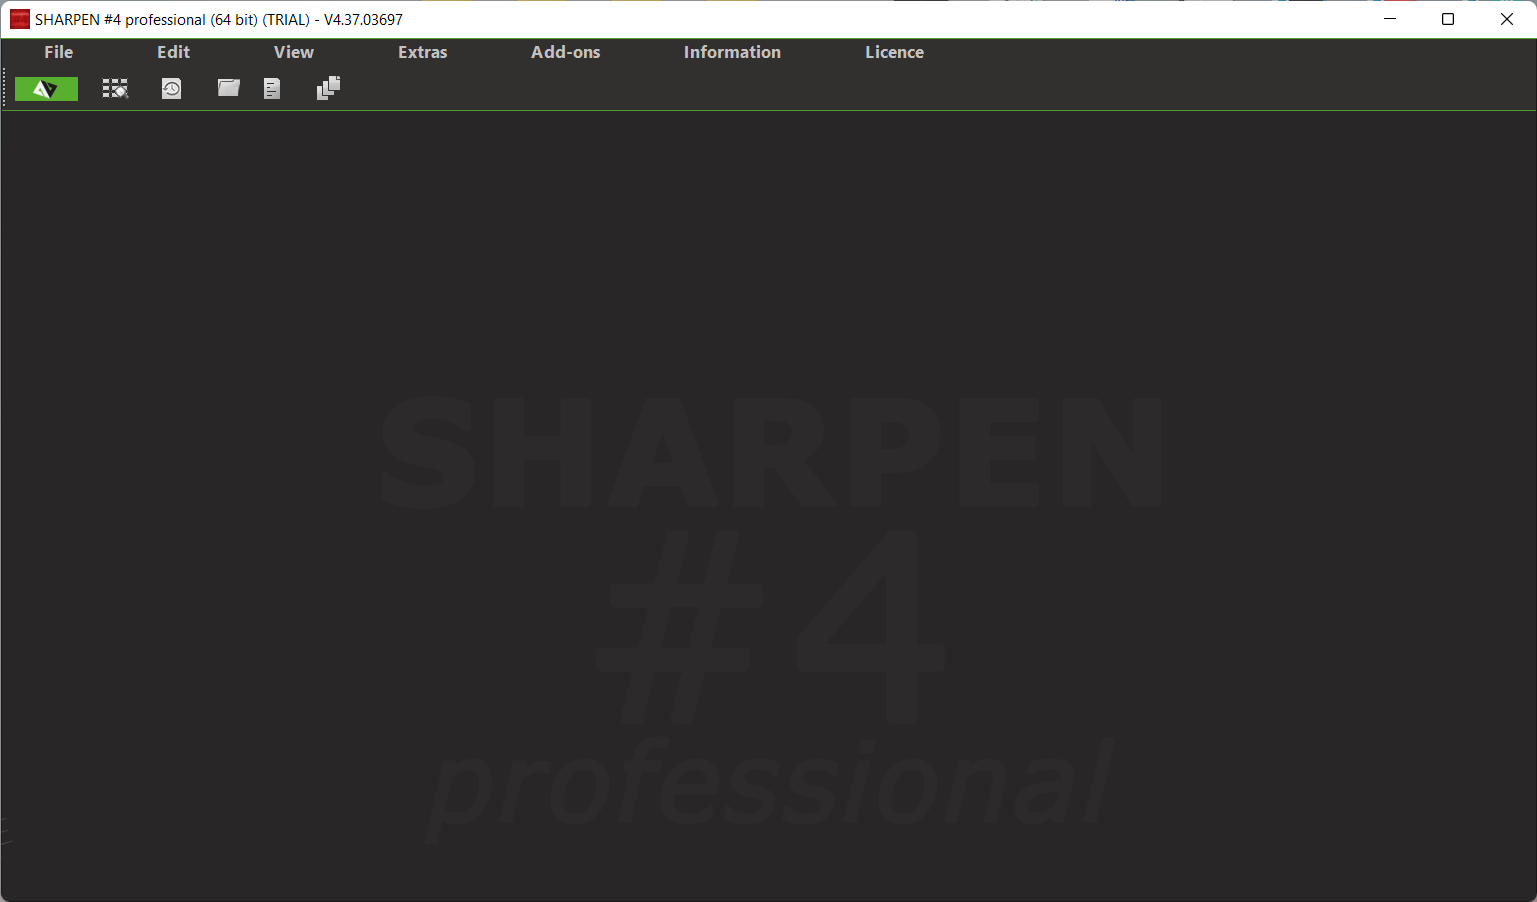 SHARPEN Professional Main Interface Screenshot